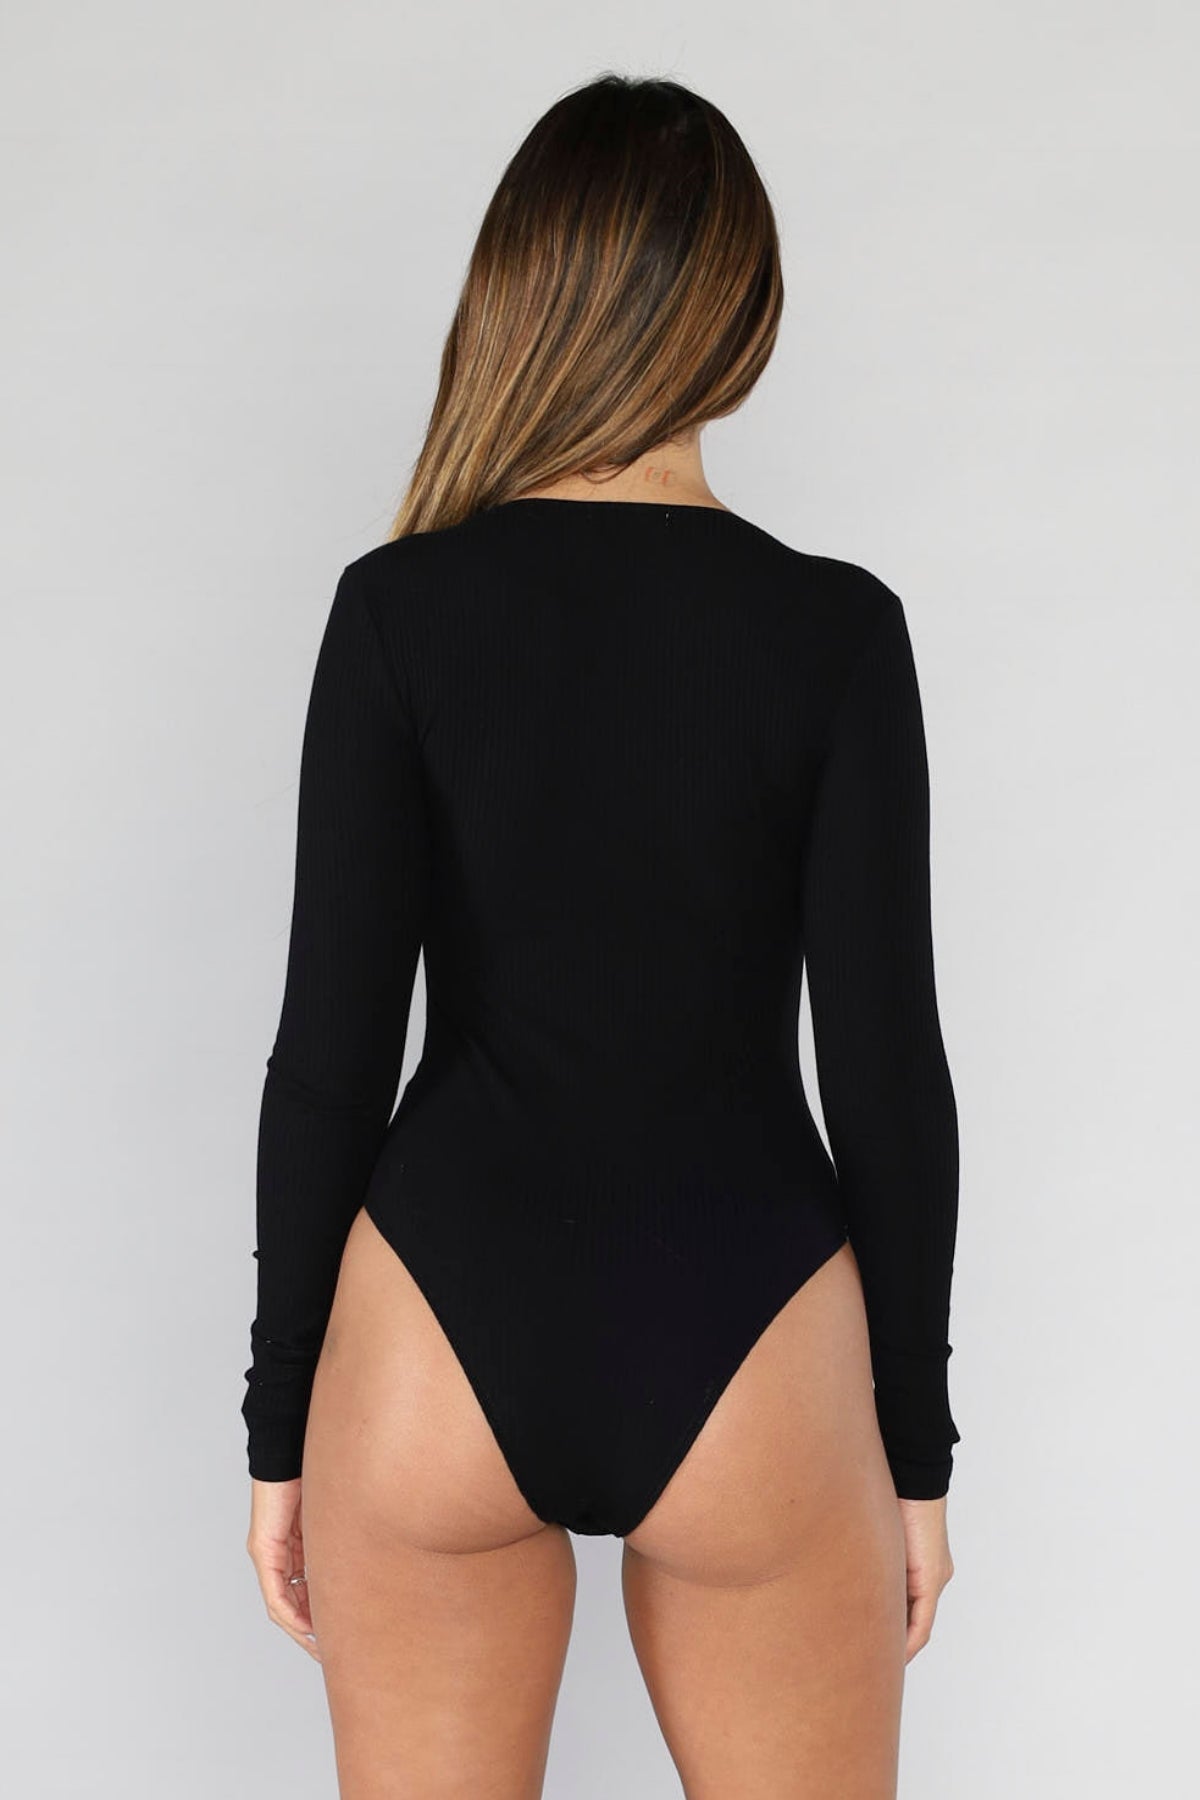 LOOKUB Women Fleece Lined Bodysuit Black Long Sleeve Bodysuit for